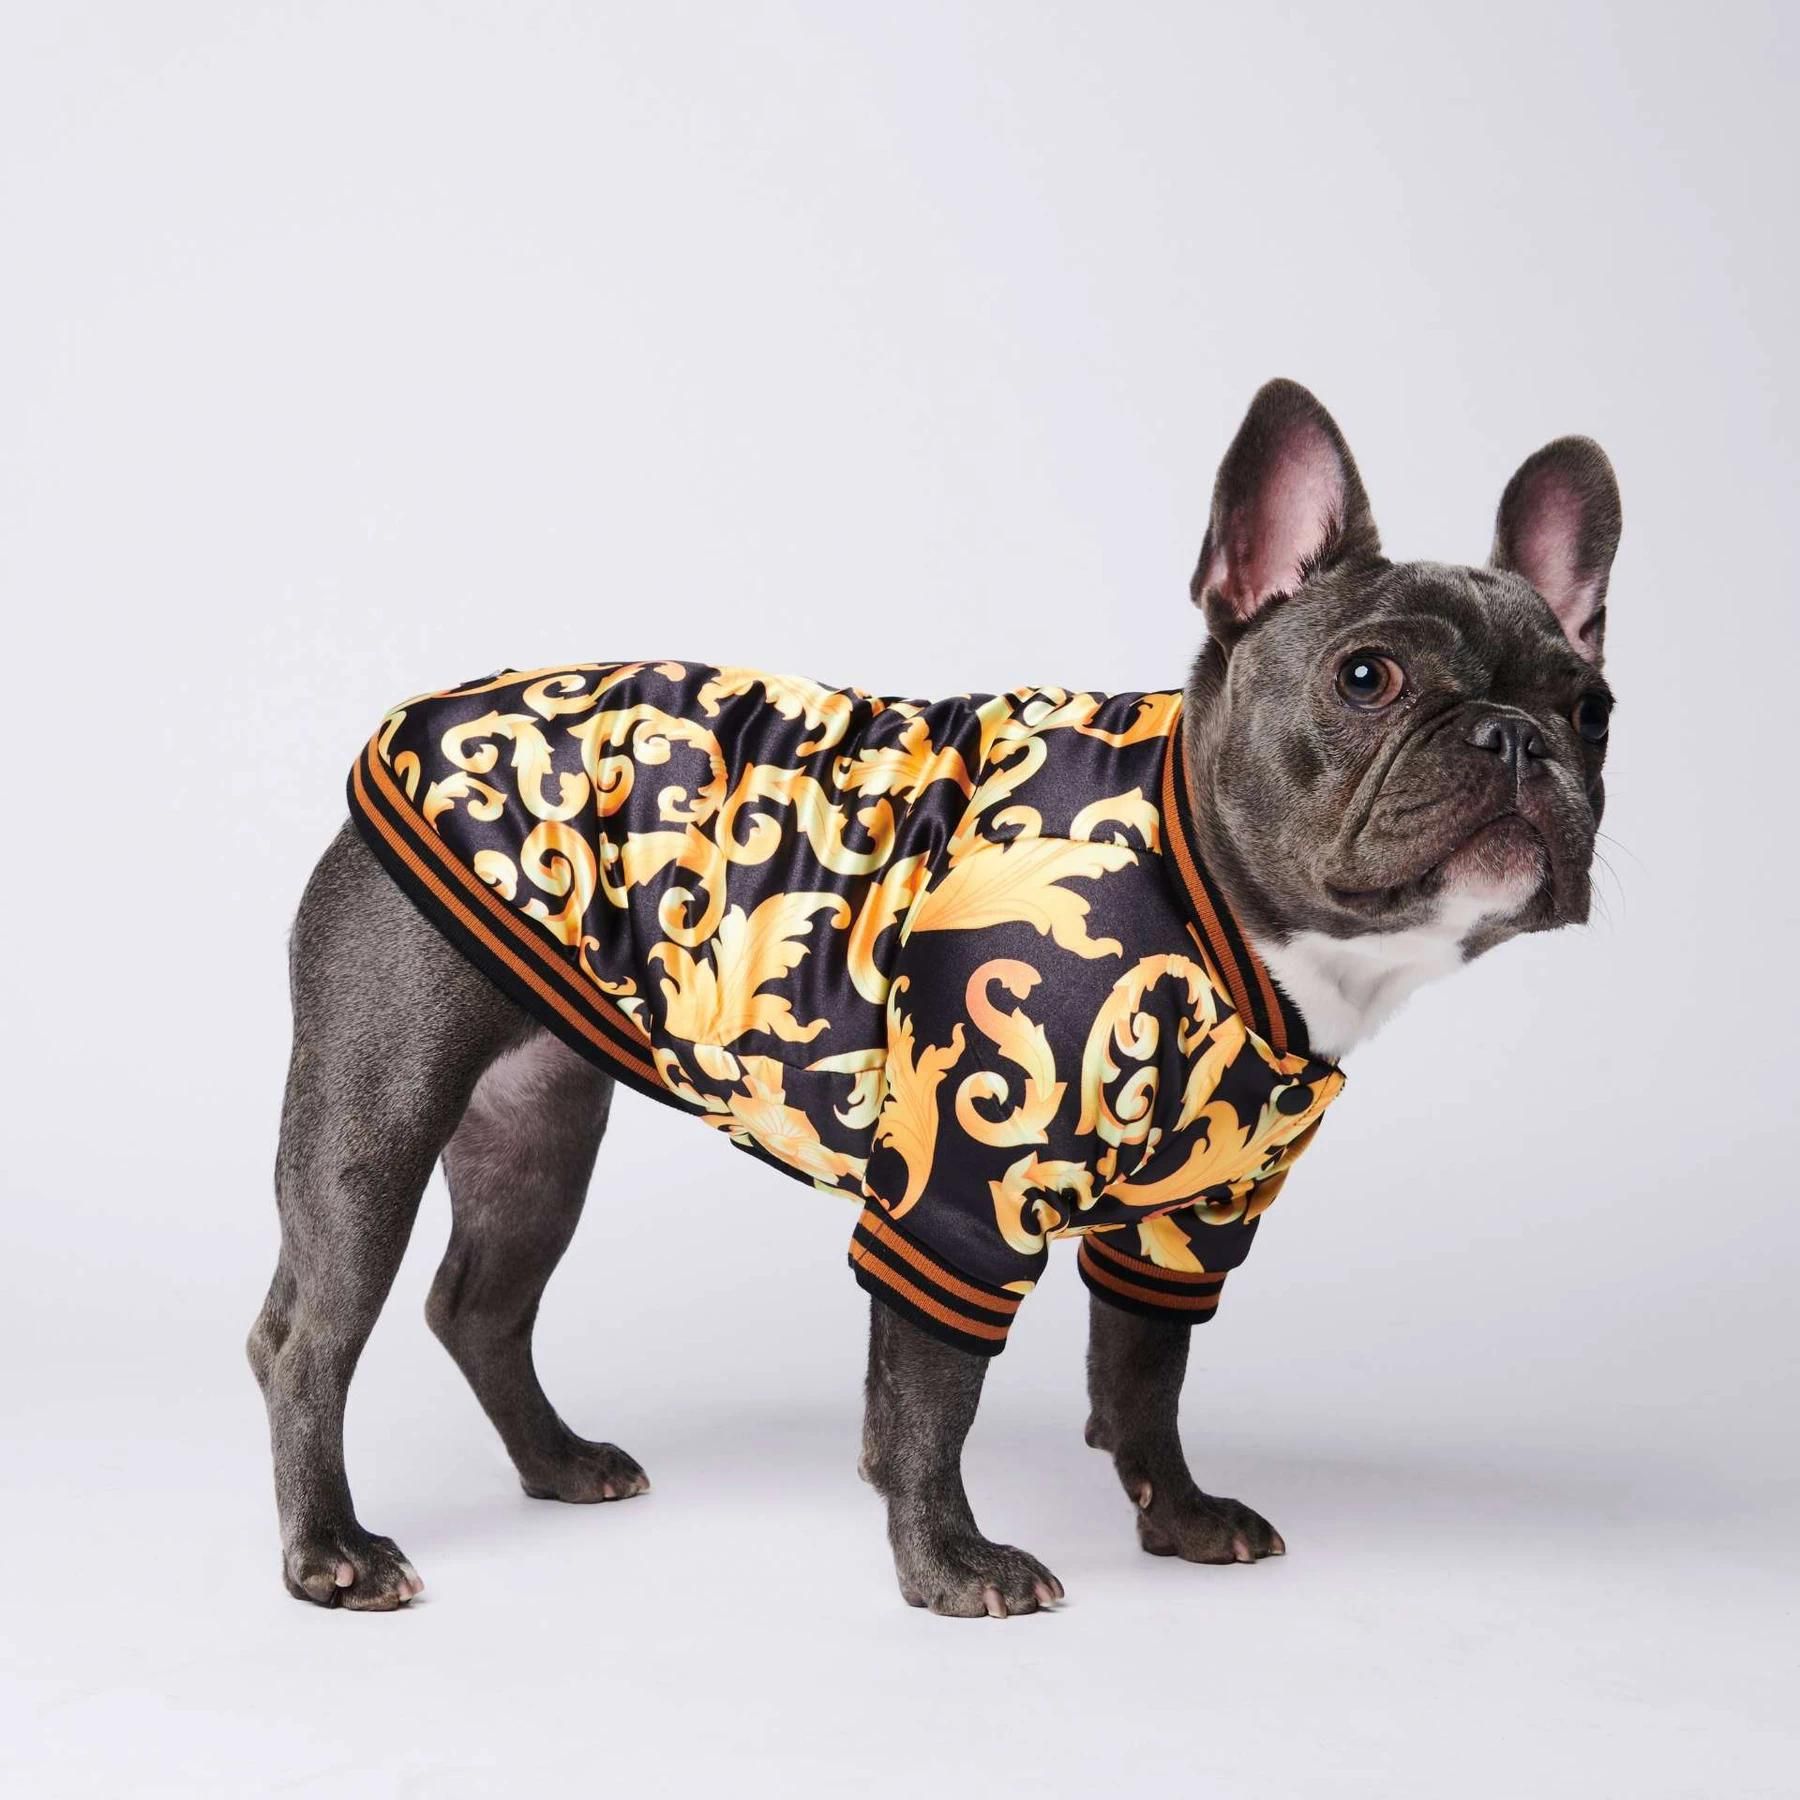 Bulldog francés de perro caliente de la capa de la de ropa